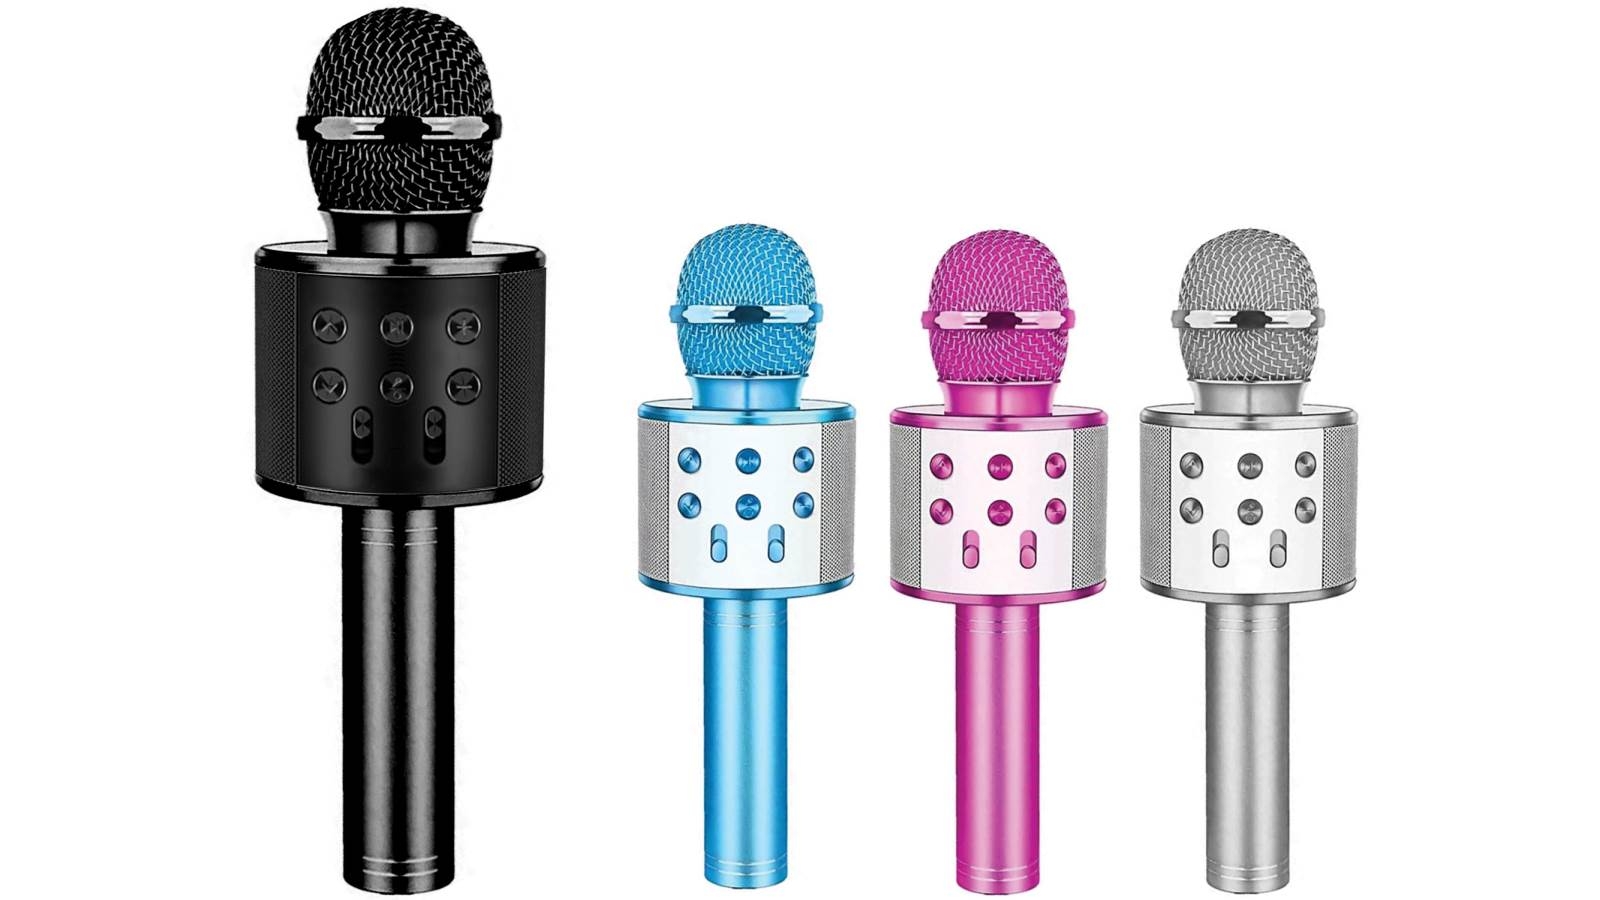 Laser Karaoke LED Microphone - Pink